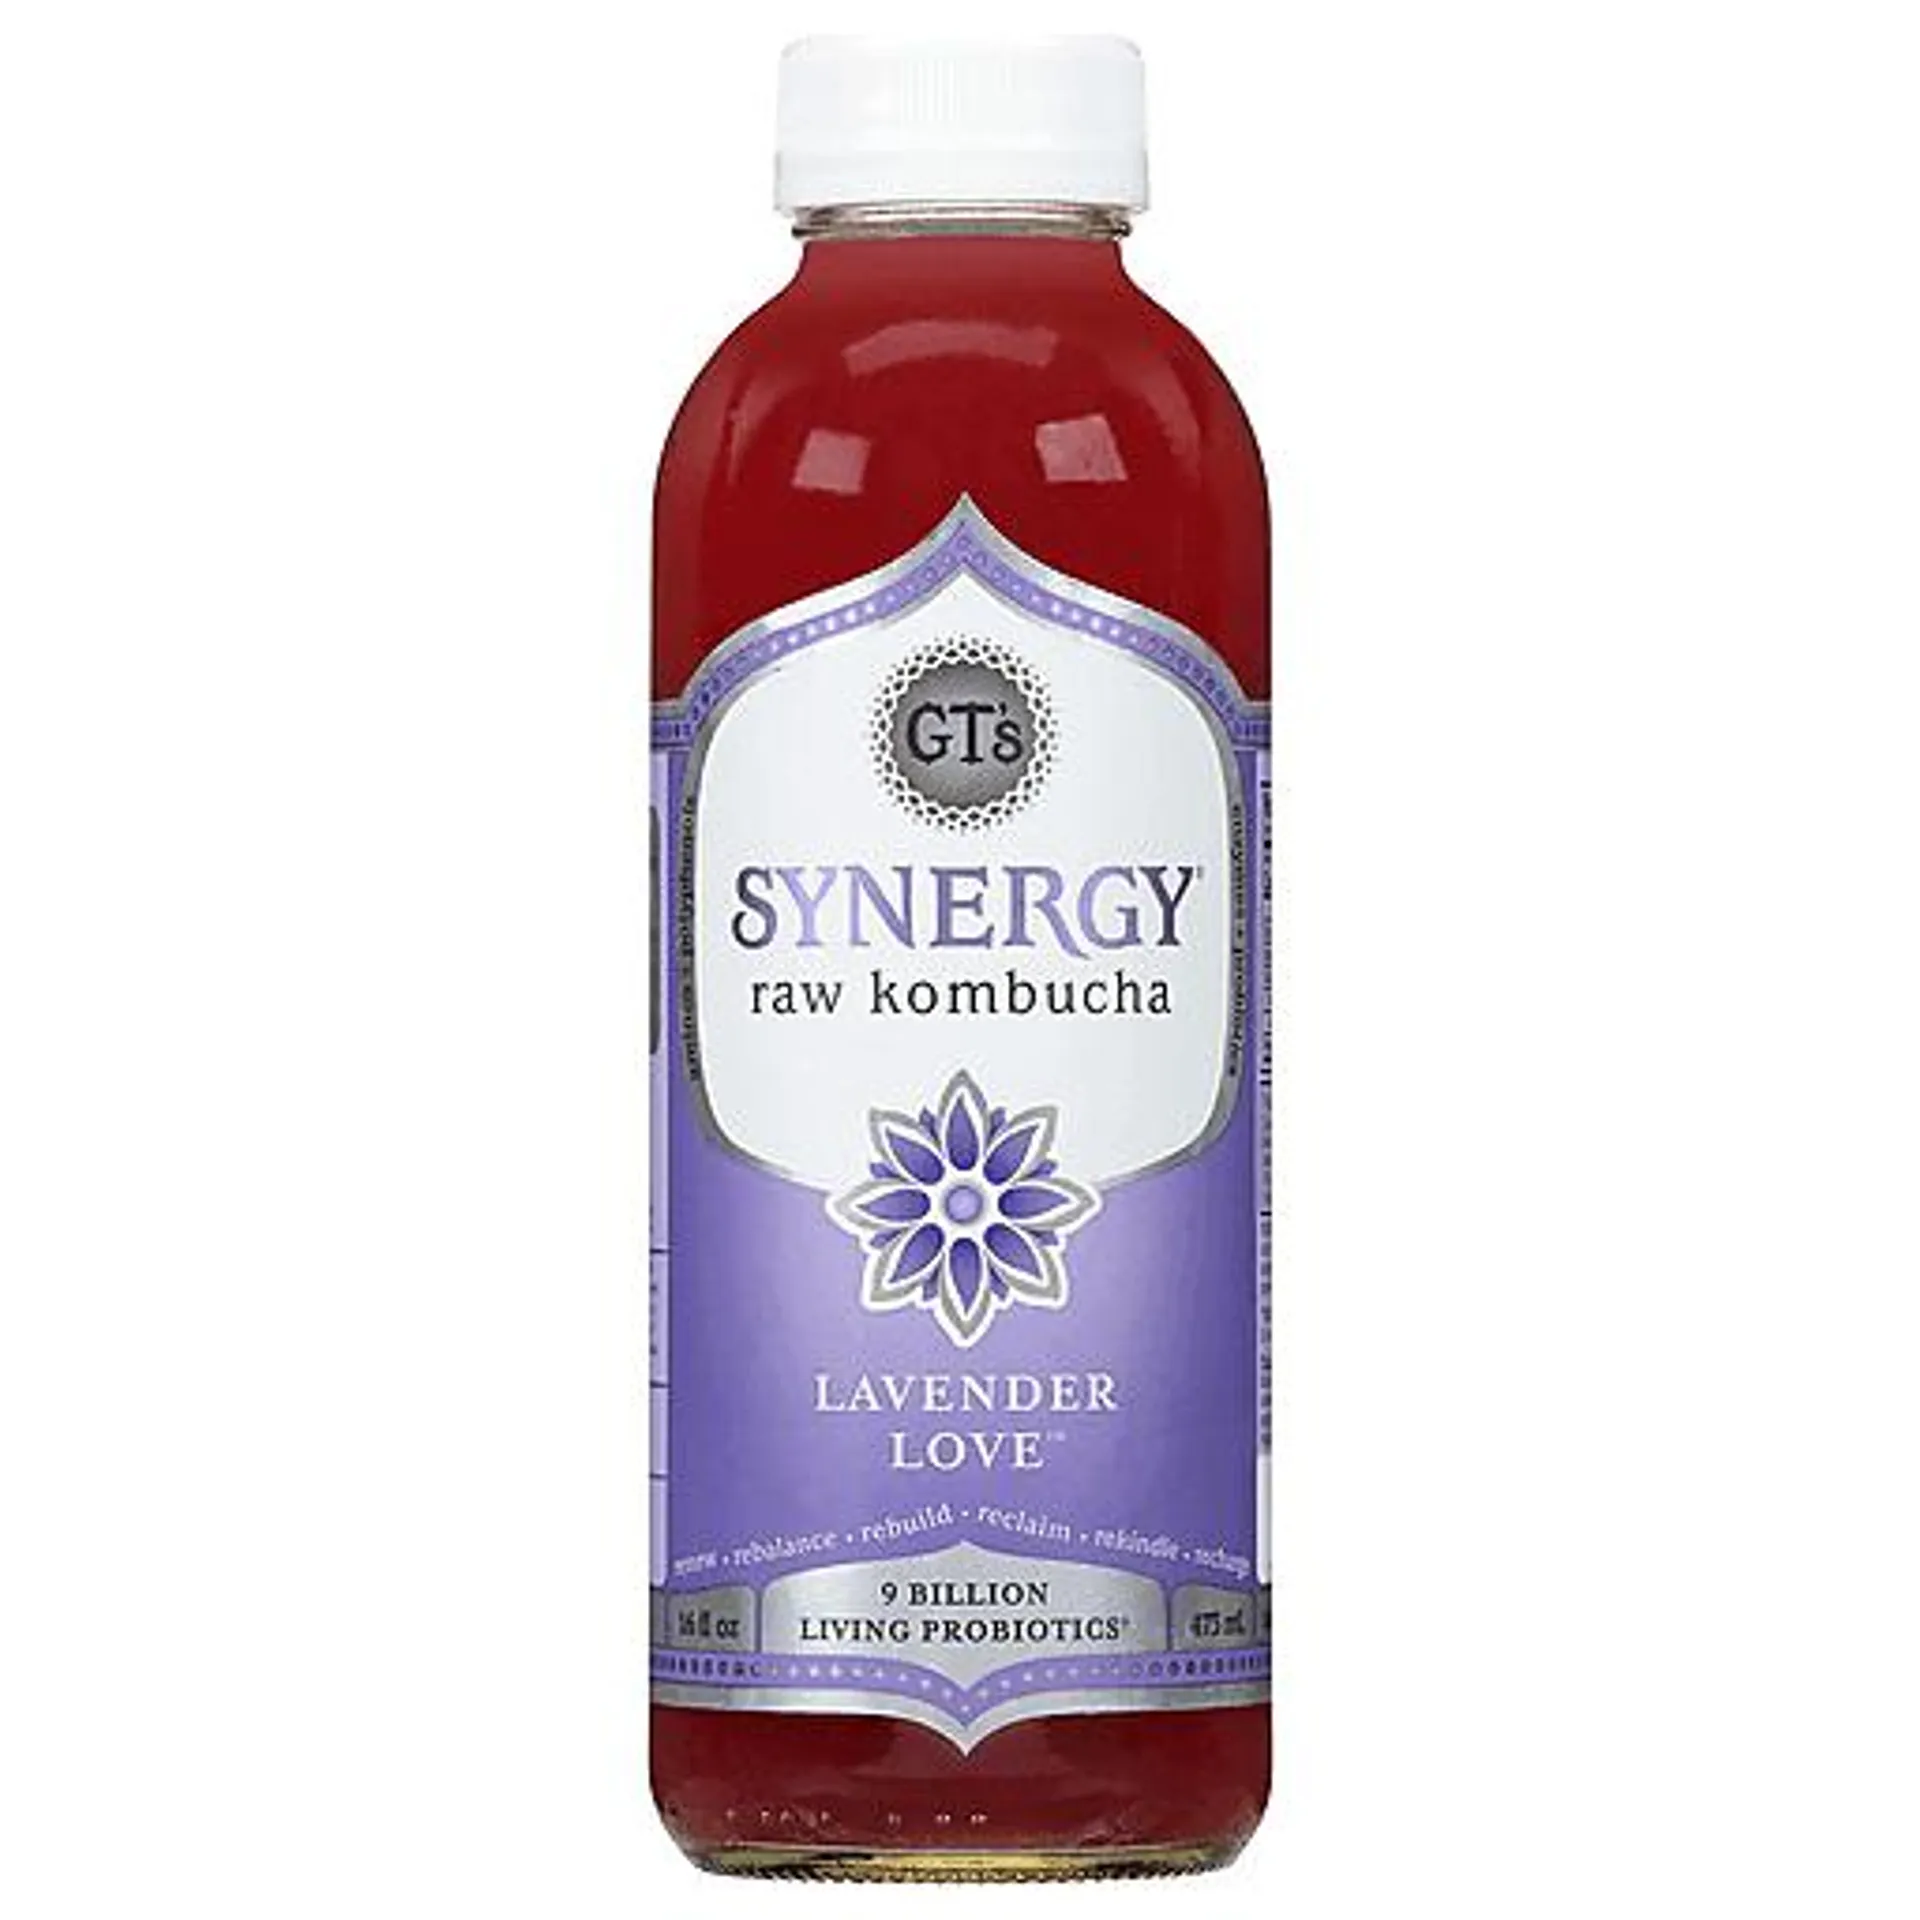 GT's Synergy Lavender Love Raw Kombucha 16 fl oz